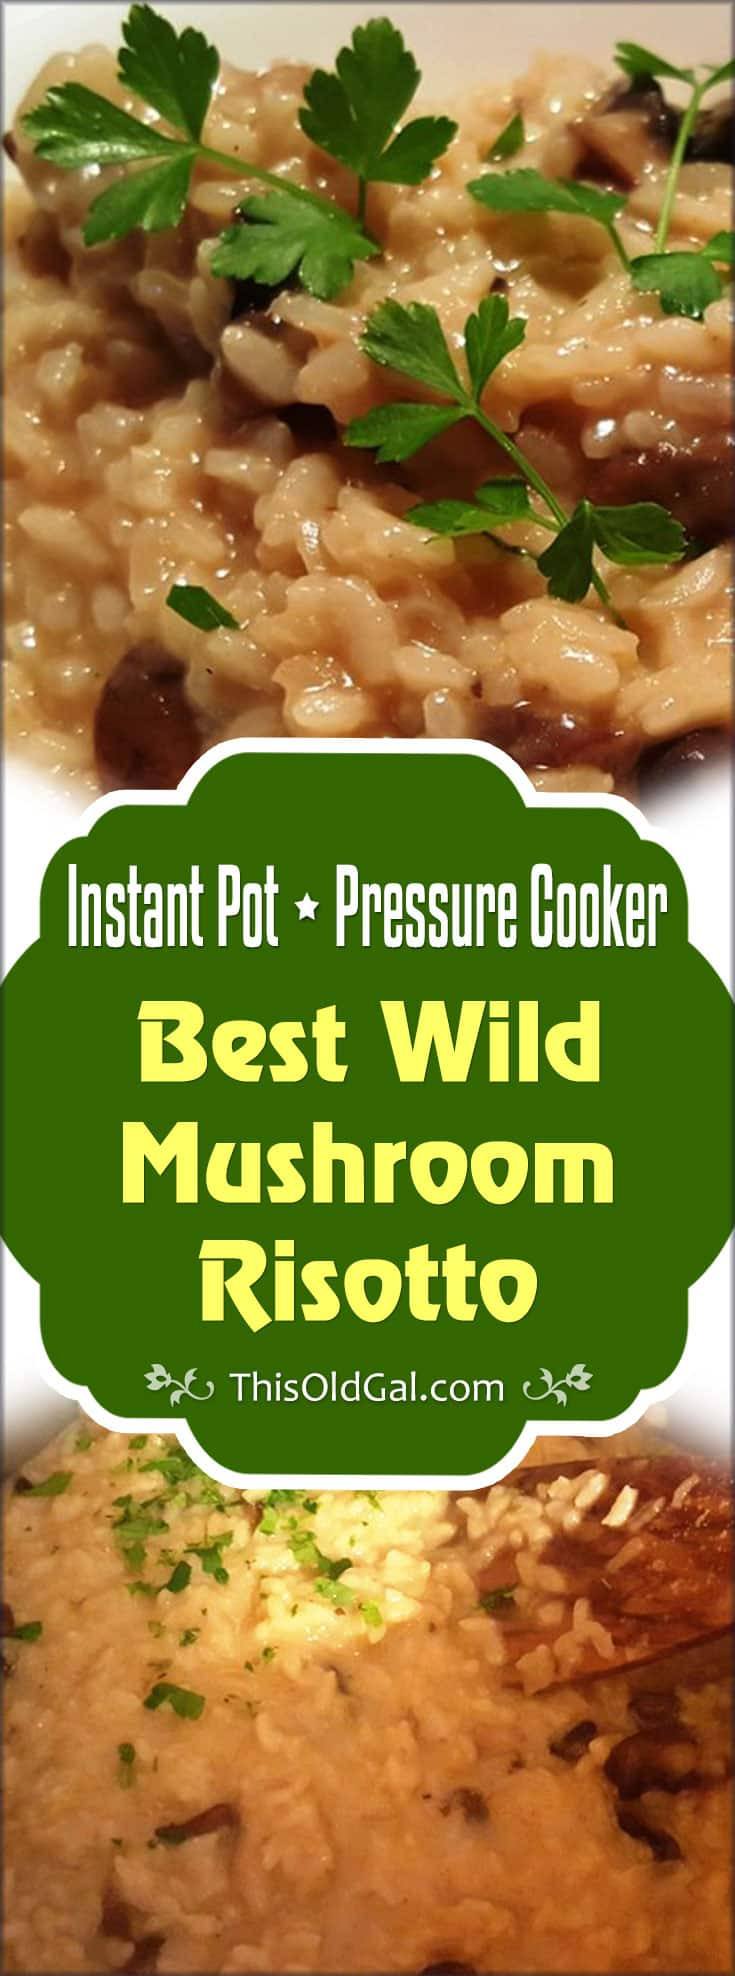 Pressure Cooker Mushroom Risotto
 Pressure Cooker Best Wild Mushroom Risotto